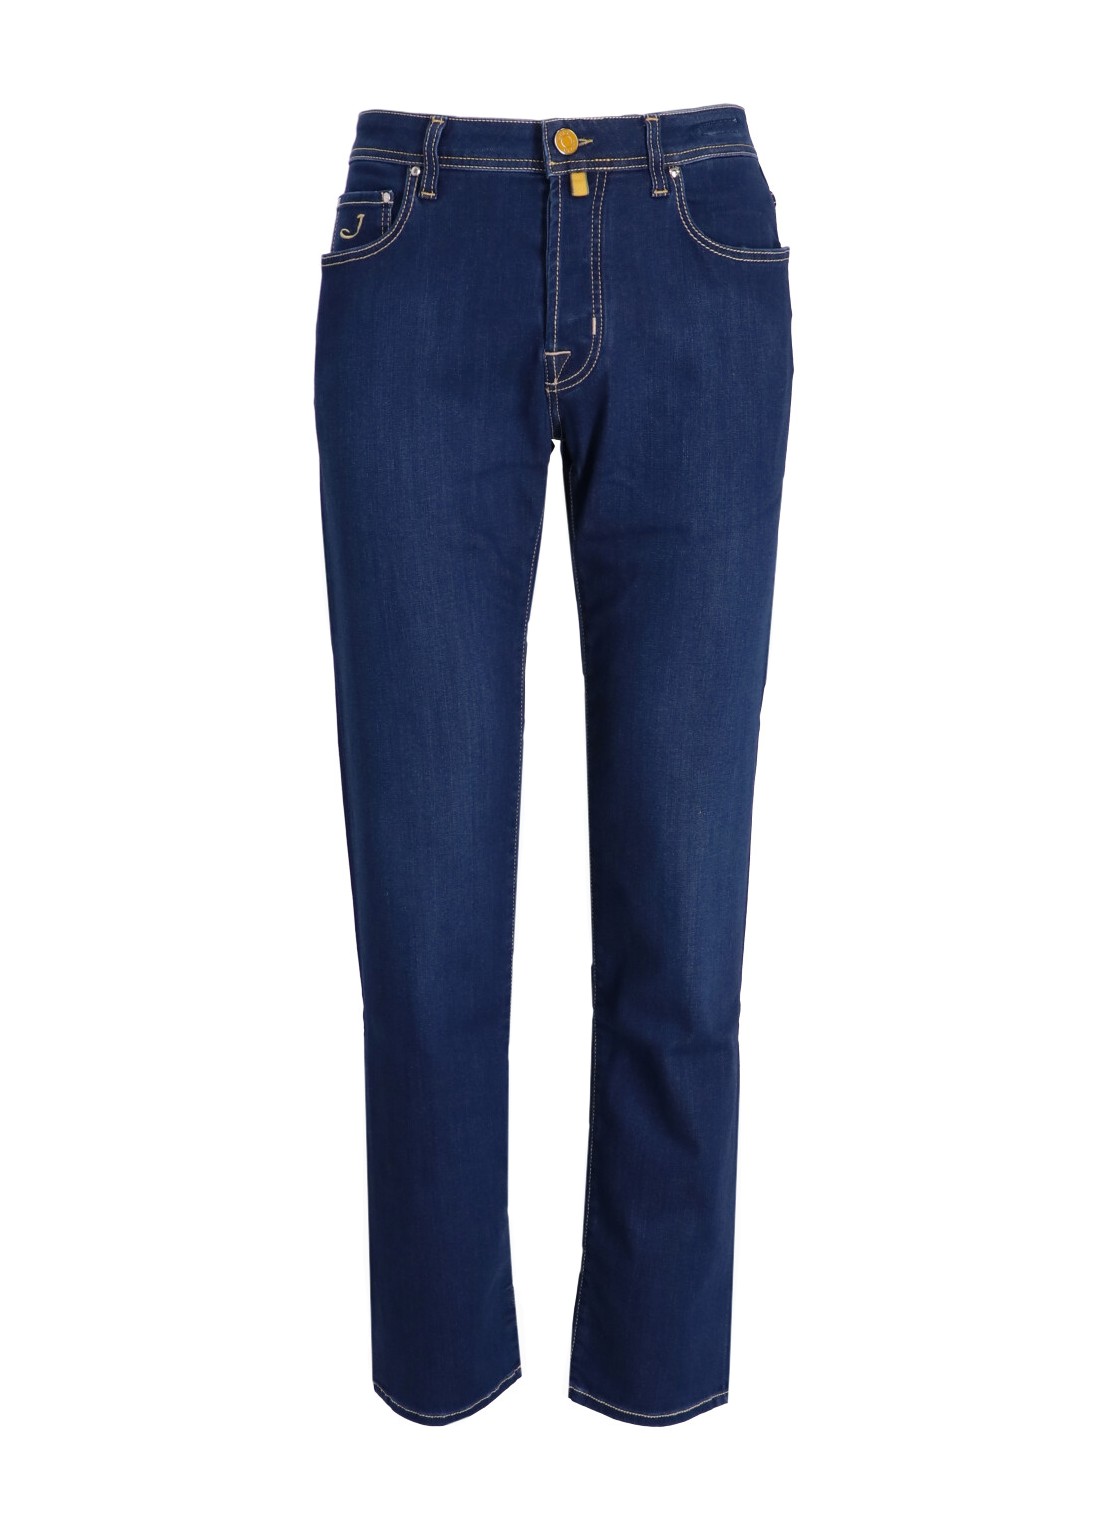 Pantalon jeans jacob cohen denim manpant 5 pkt slim fit bard - uqe0434p3582 755d talla 34
 